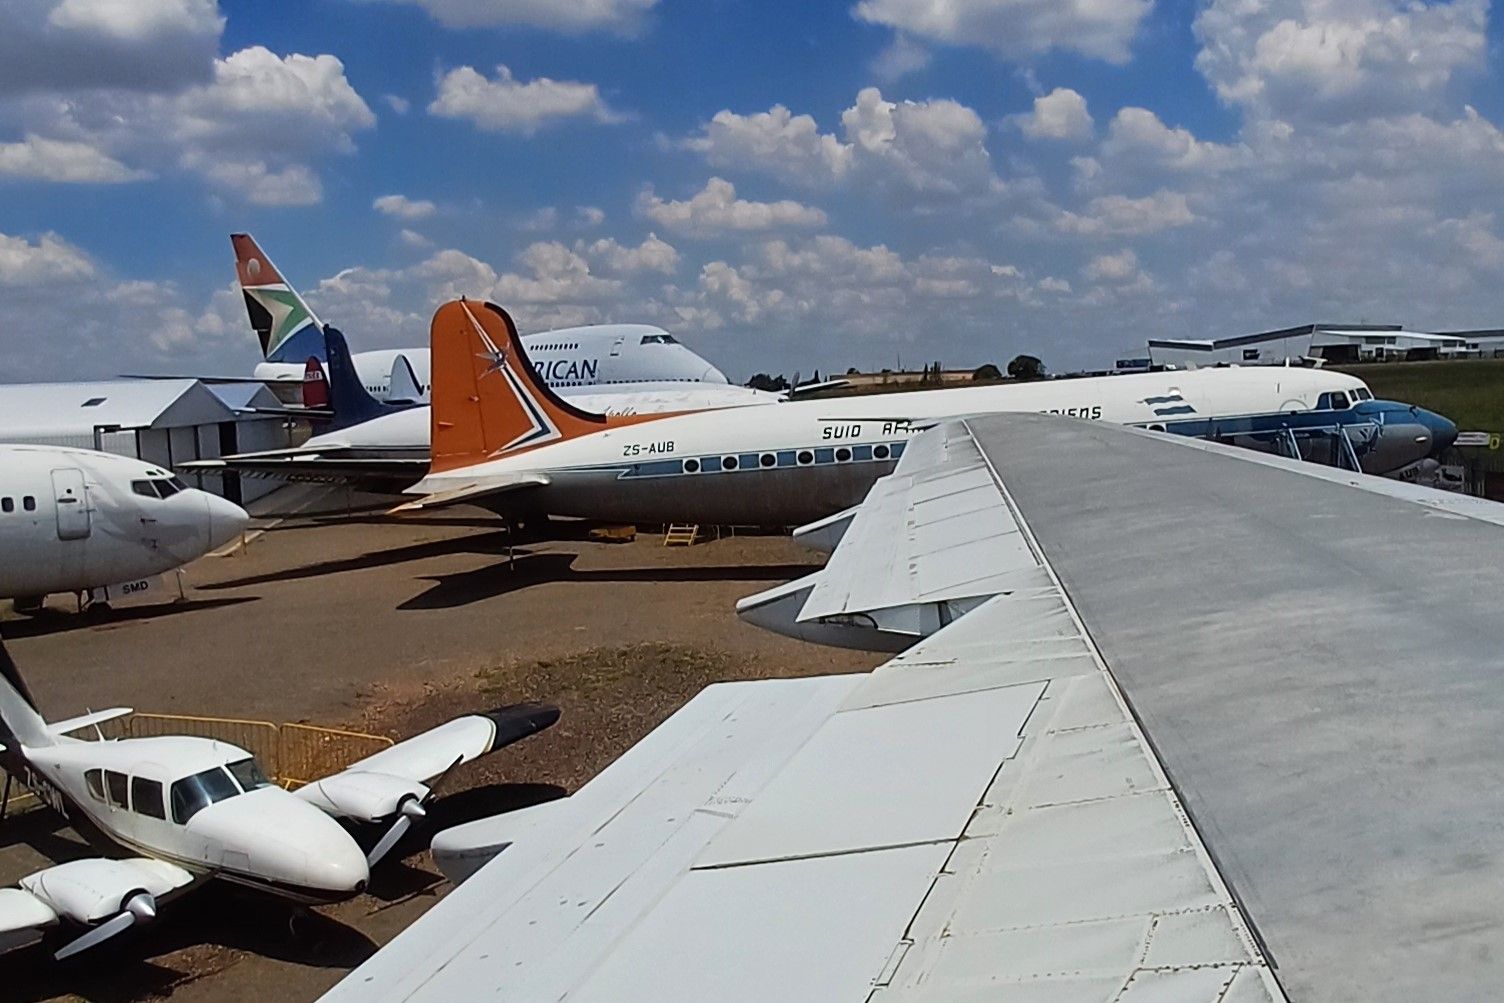 South African Airways Boeing 747SP